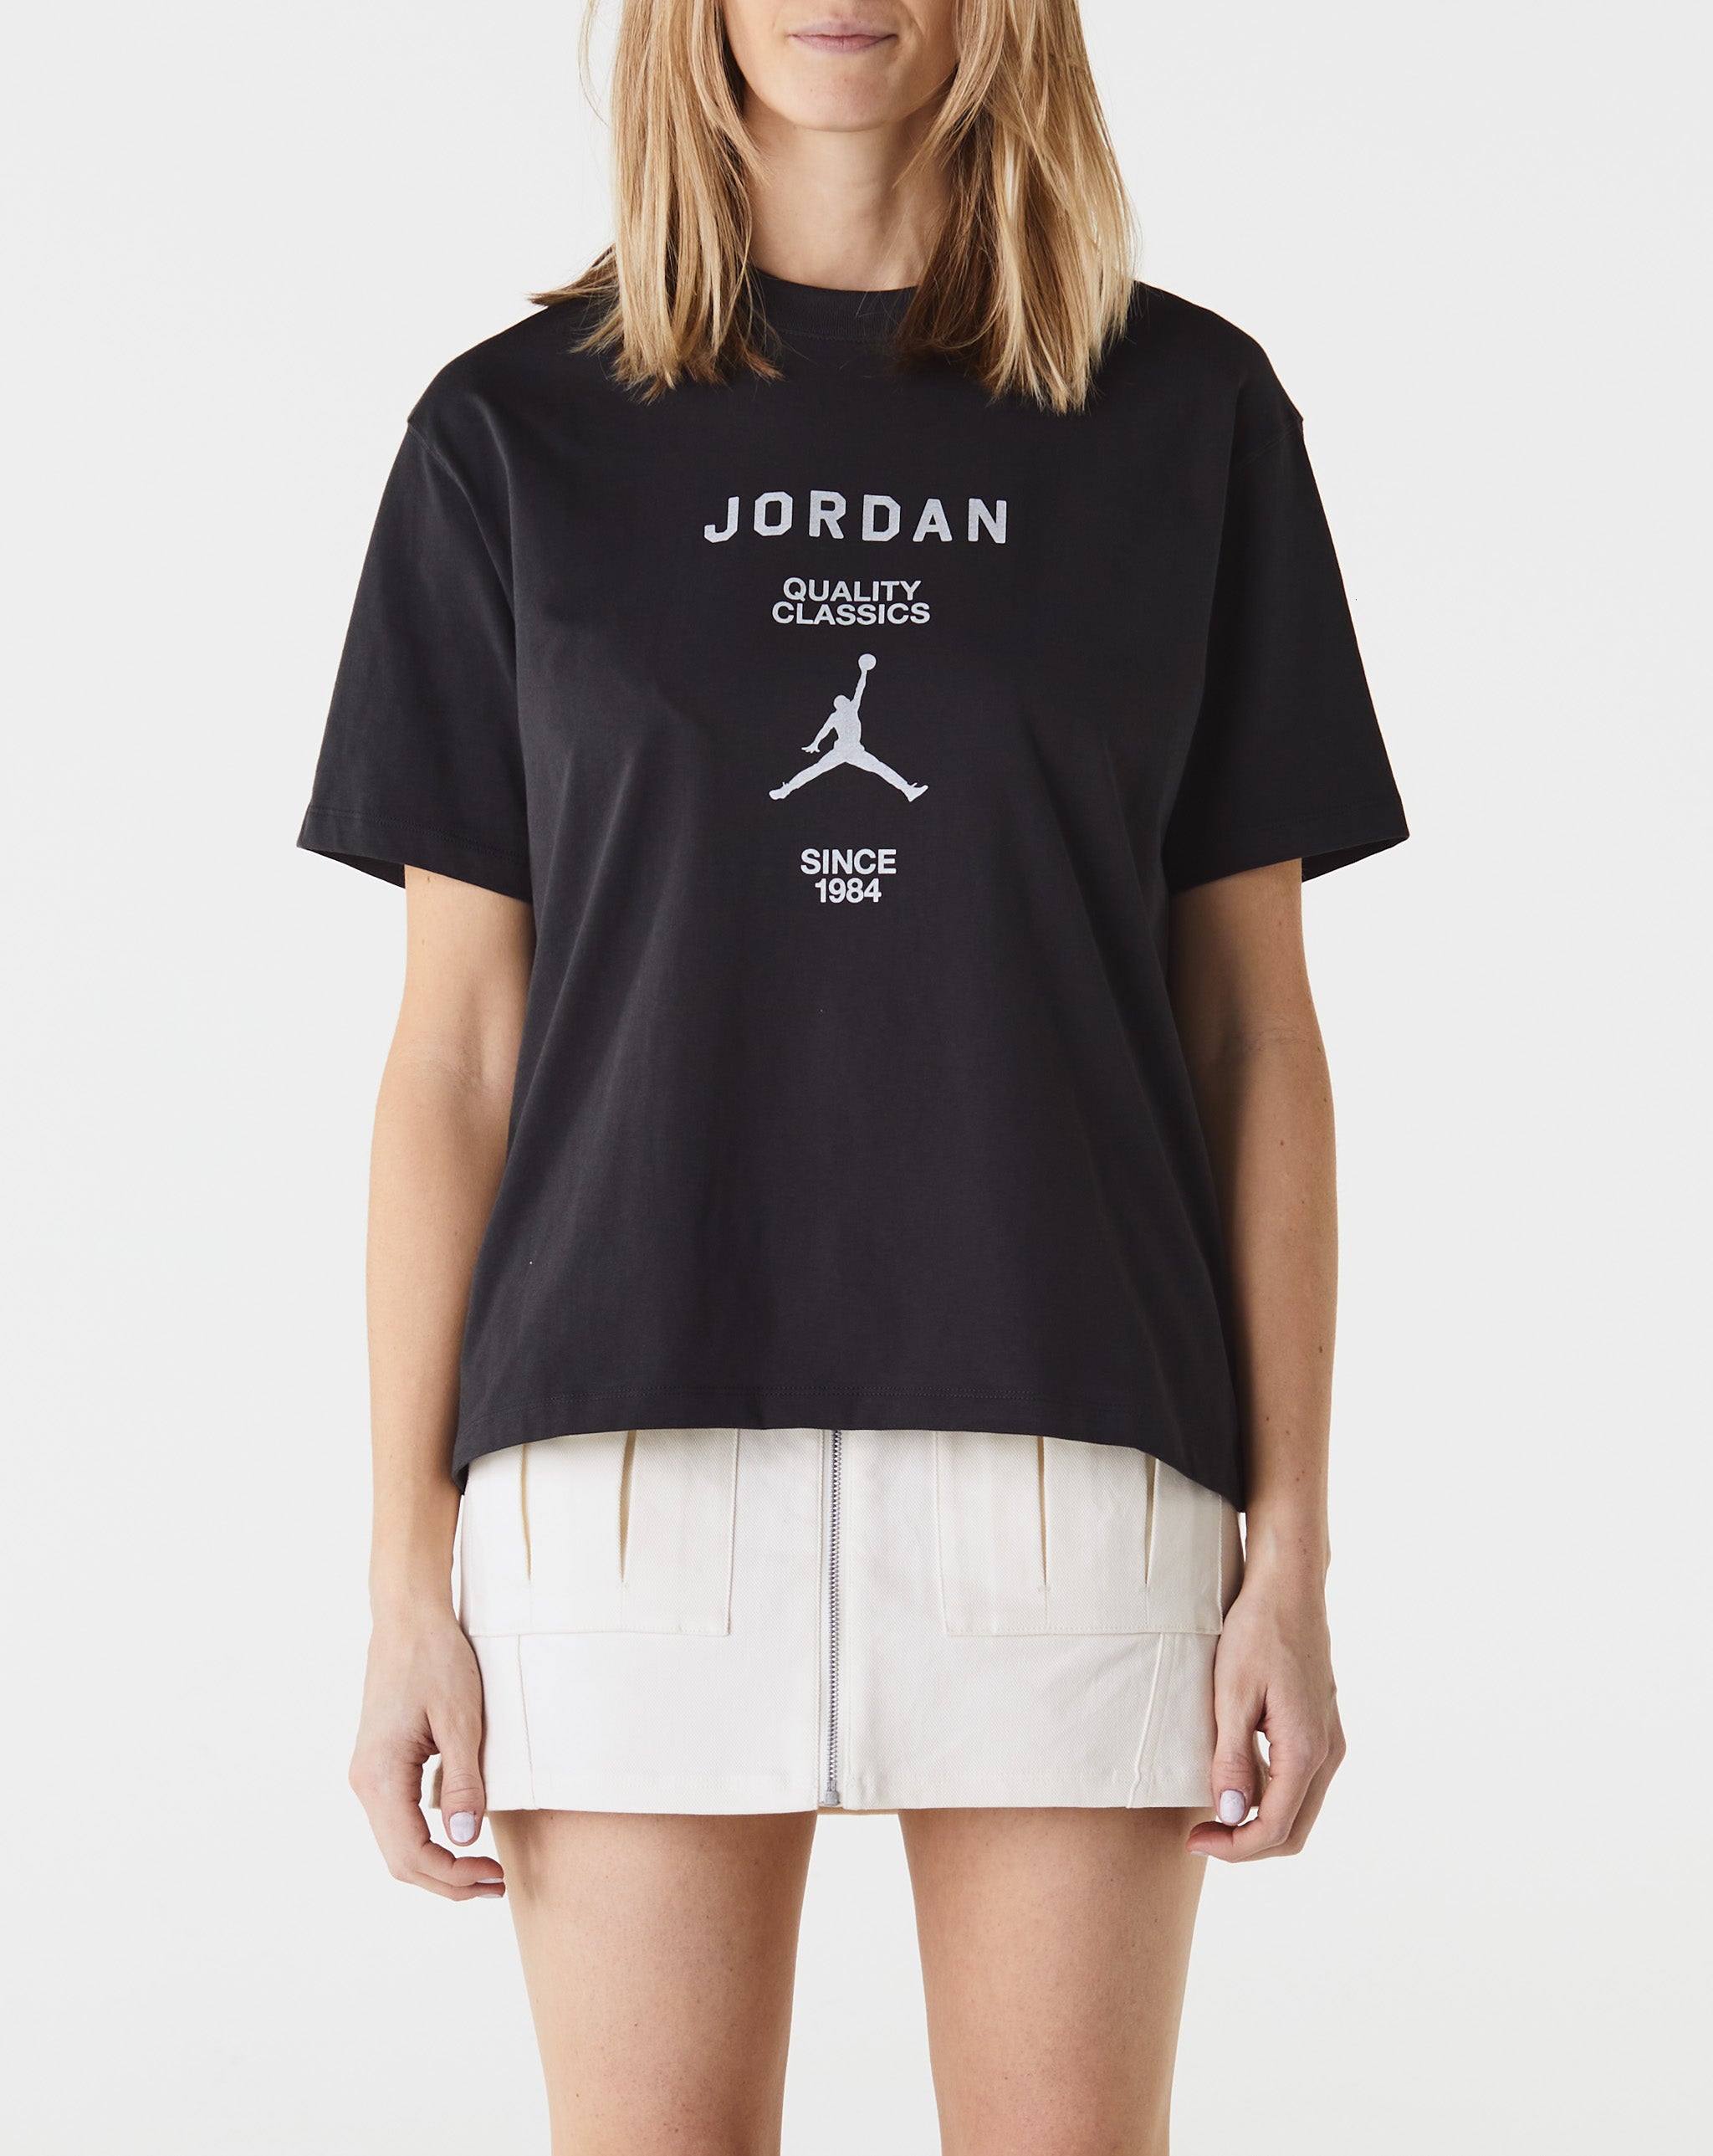 Air Jordan Women's Jordan Quality Classics T-Shirt  - Cheap Cerbe Jordan outlet